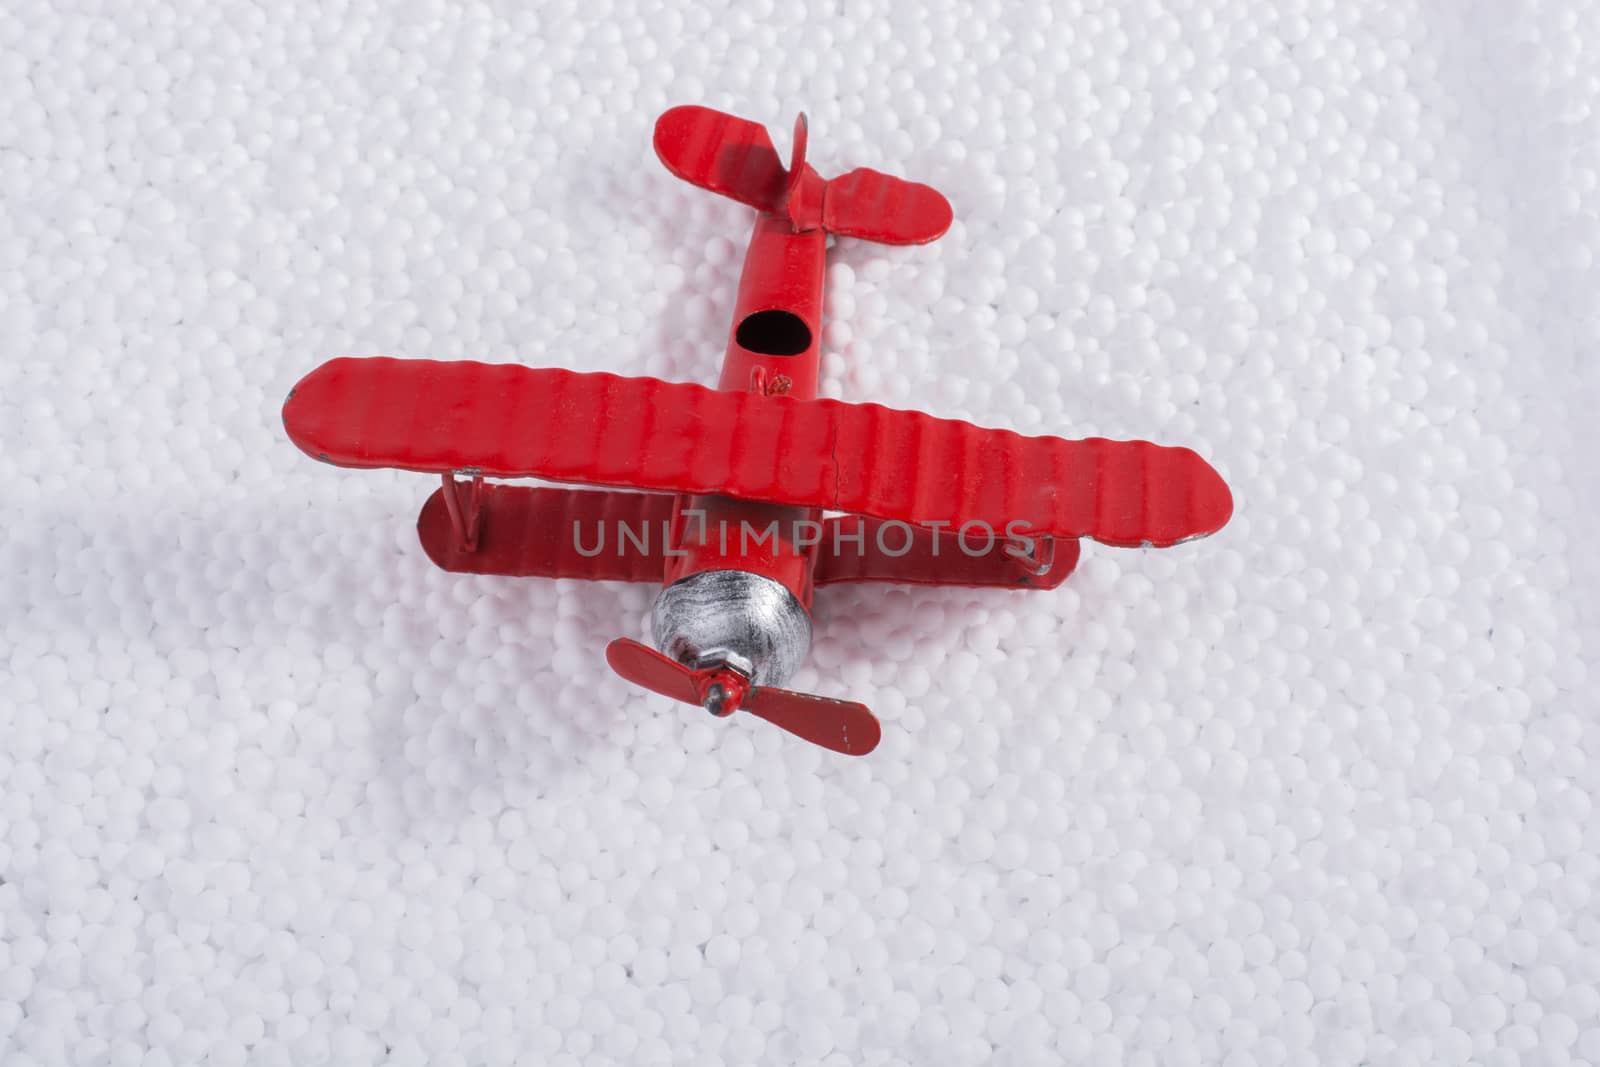 Toy airplane on little  white polystyrene foam balls